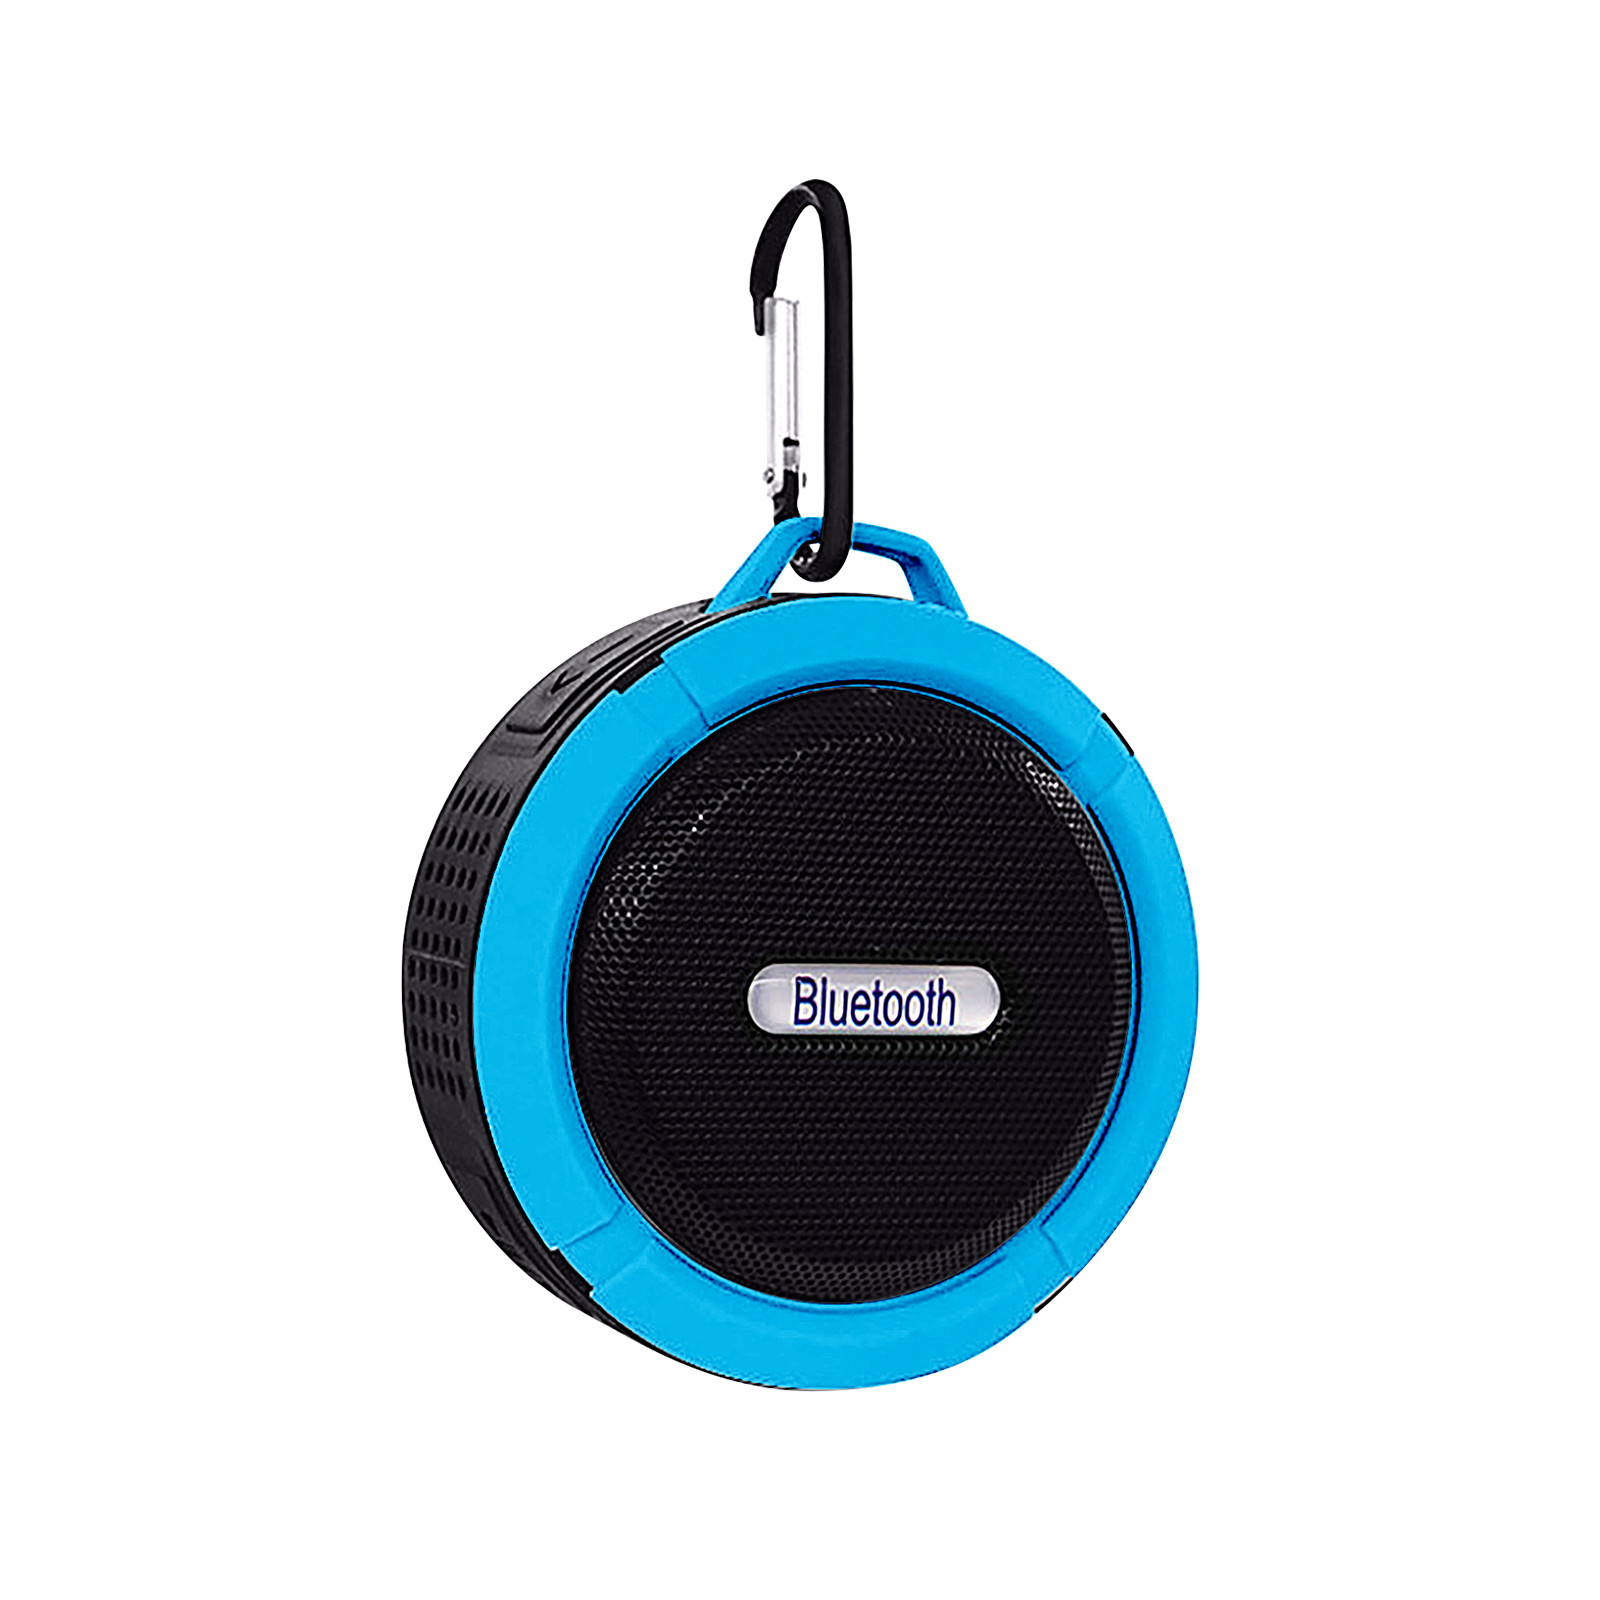 Deals of the Day,Tarmeek Bluetooth Speakers Outdoor Portable Buckle Gift Handsfree Car TF Card Wireless Audio C6 Waterproof Sucker Bluetooth Audio 5W High-power Horn Speakers Bluetooth Wireless - image 1 of 9